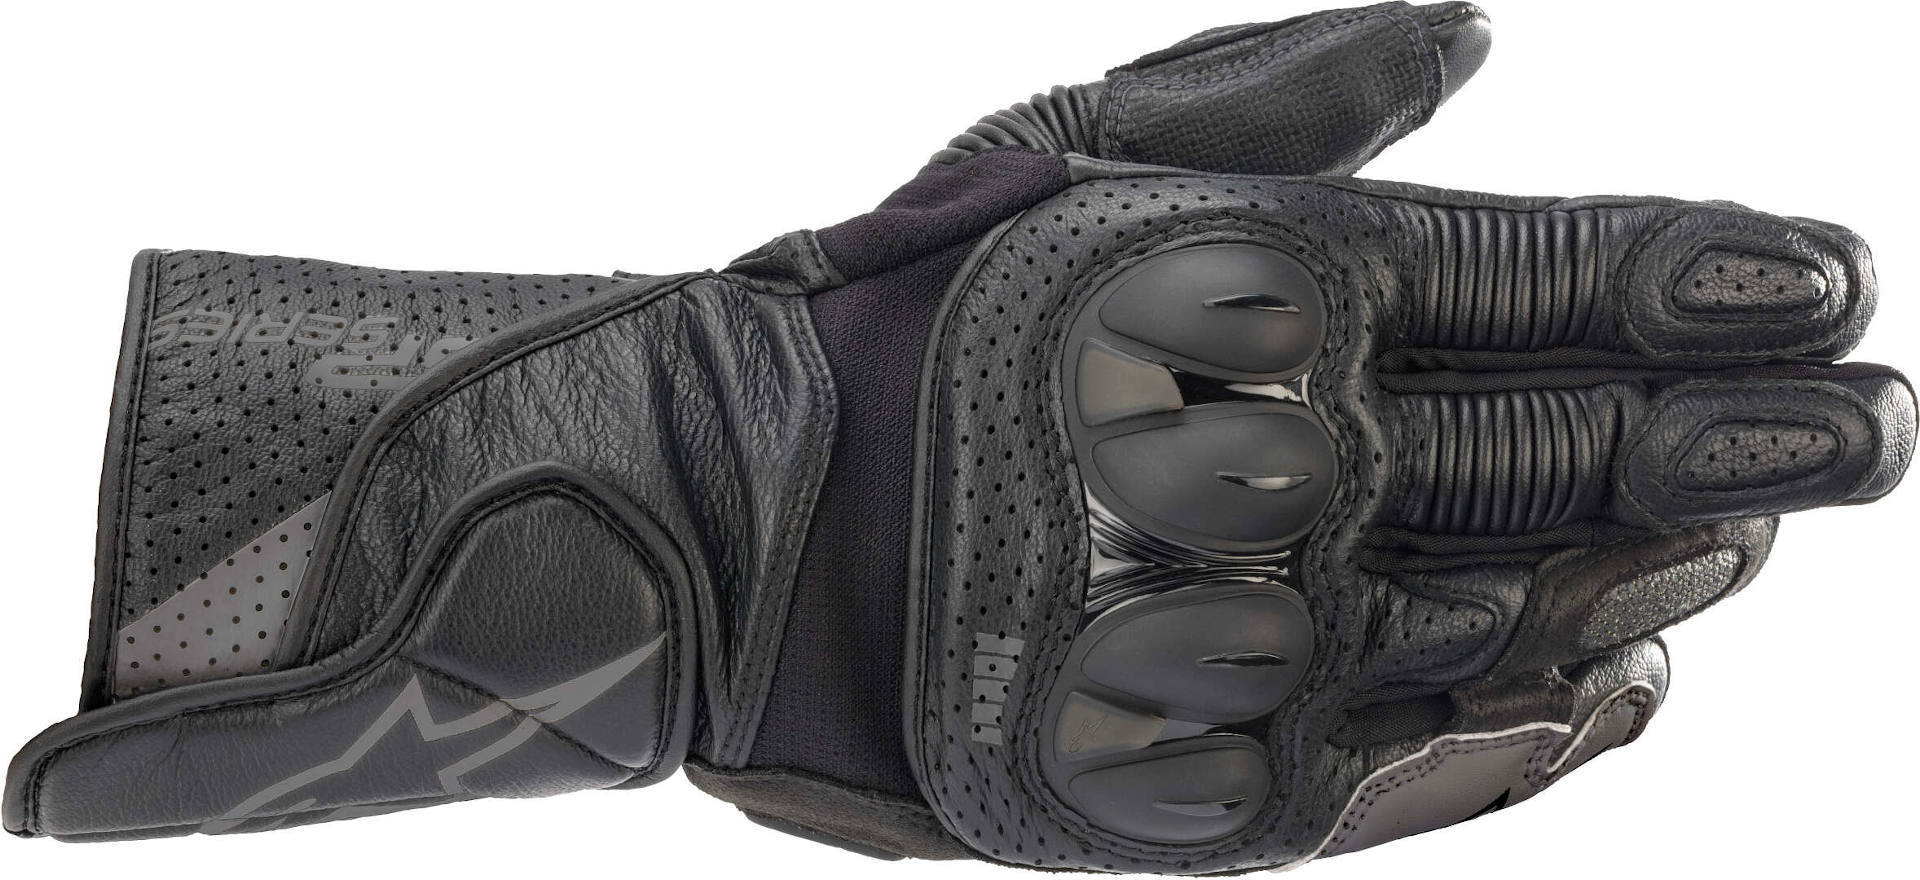 [SALE] Alpinestars SP-2 V3 Black/Gray Gloves - M